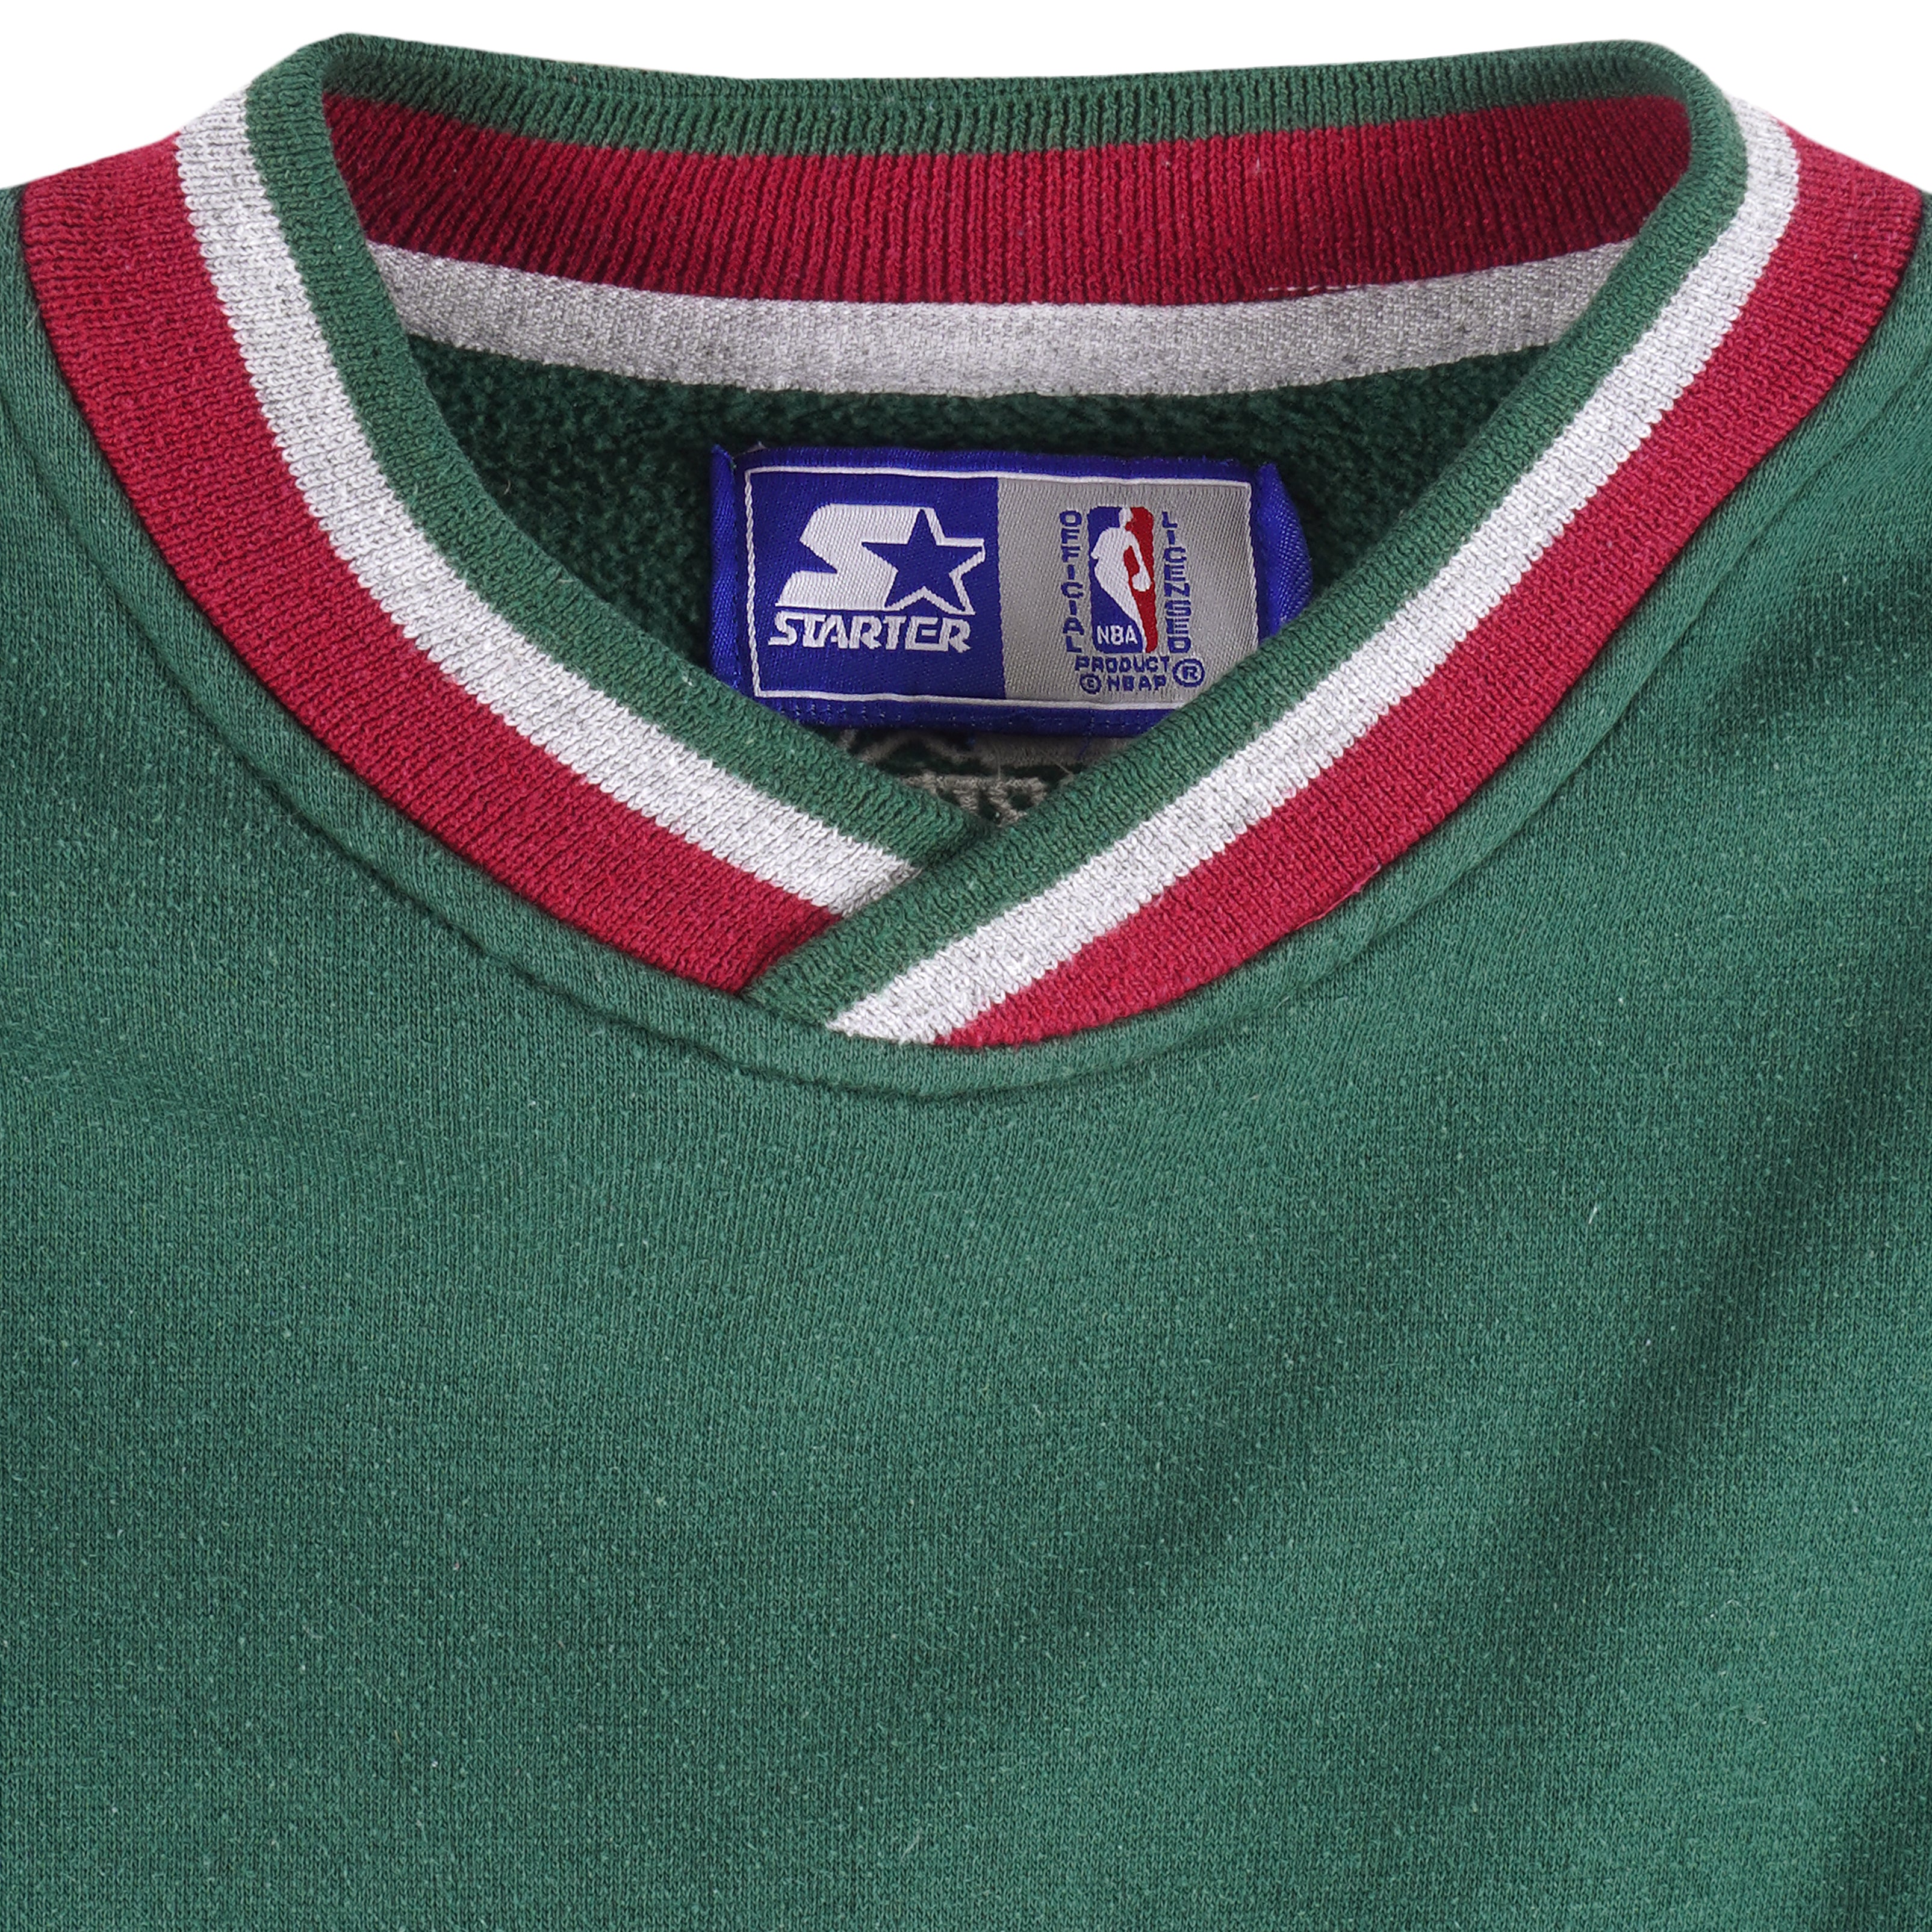 Vintage Seattle Supersonics NBA Crewneck sweatshirt. Tagged as a large